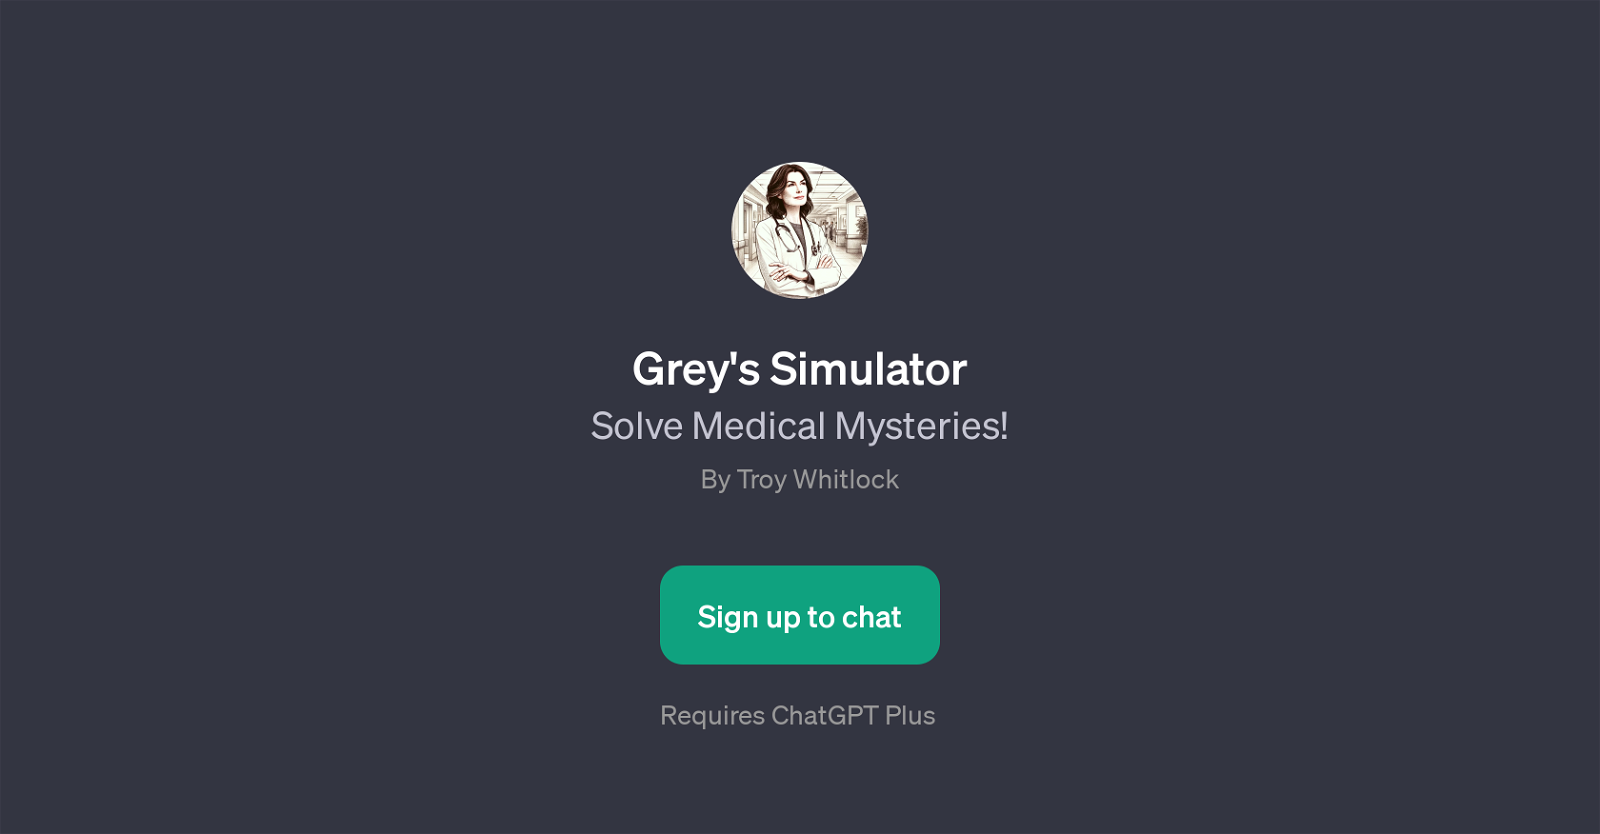 Grey's Simulator website